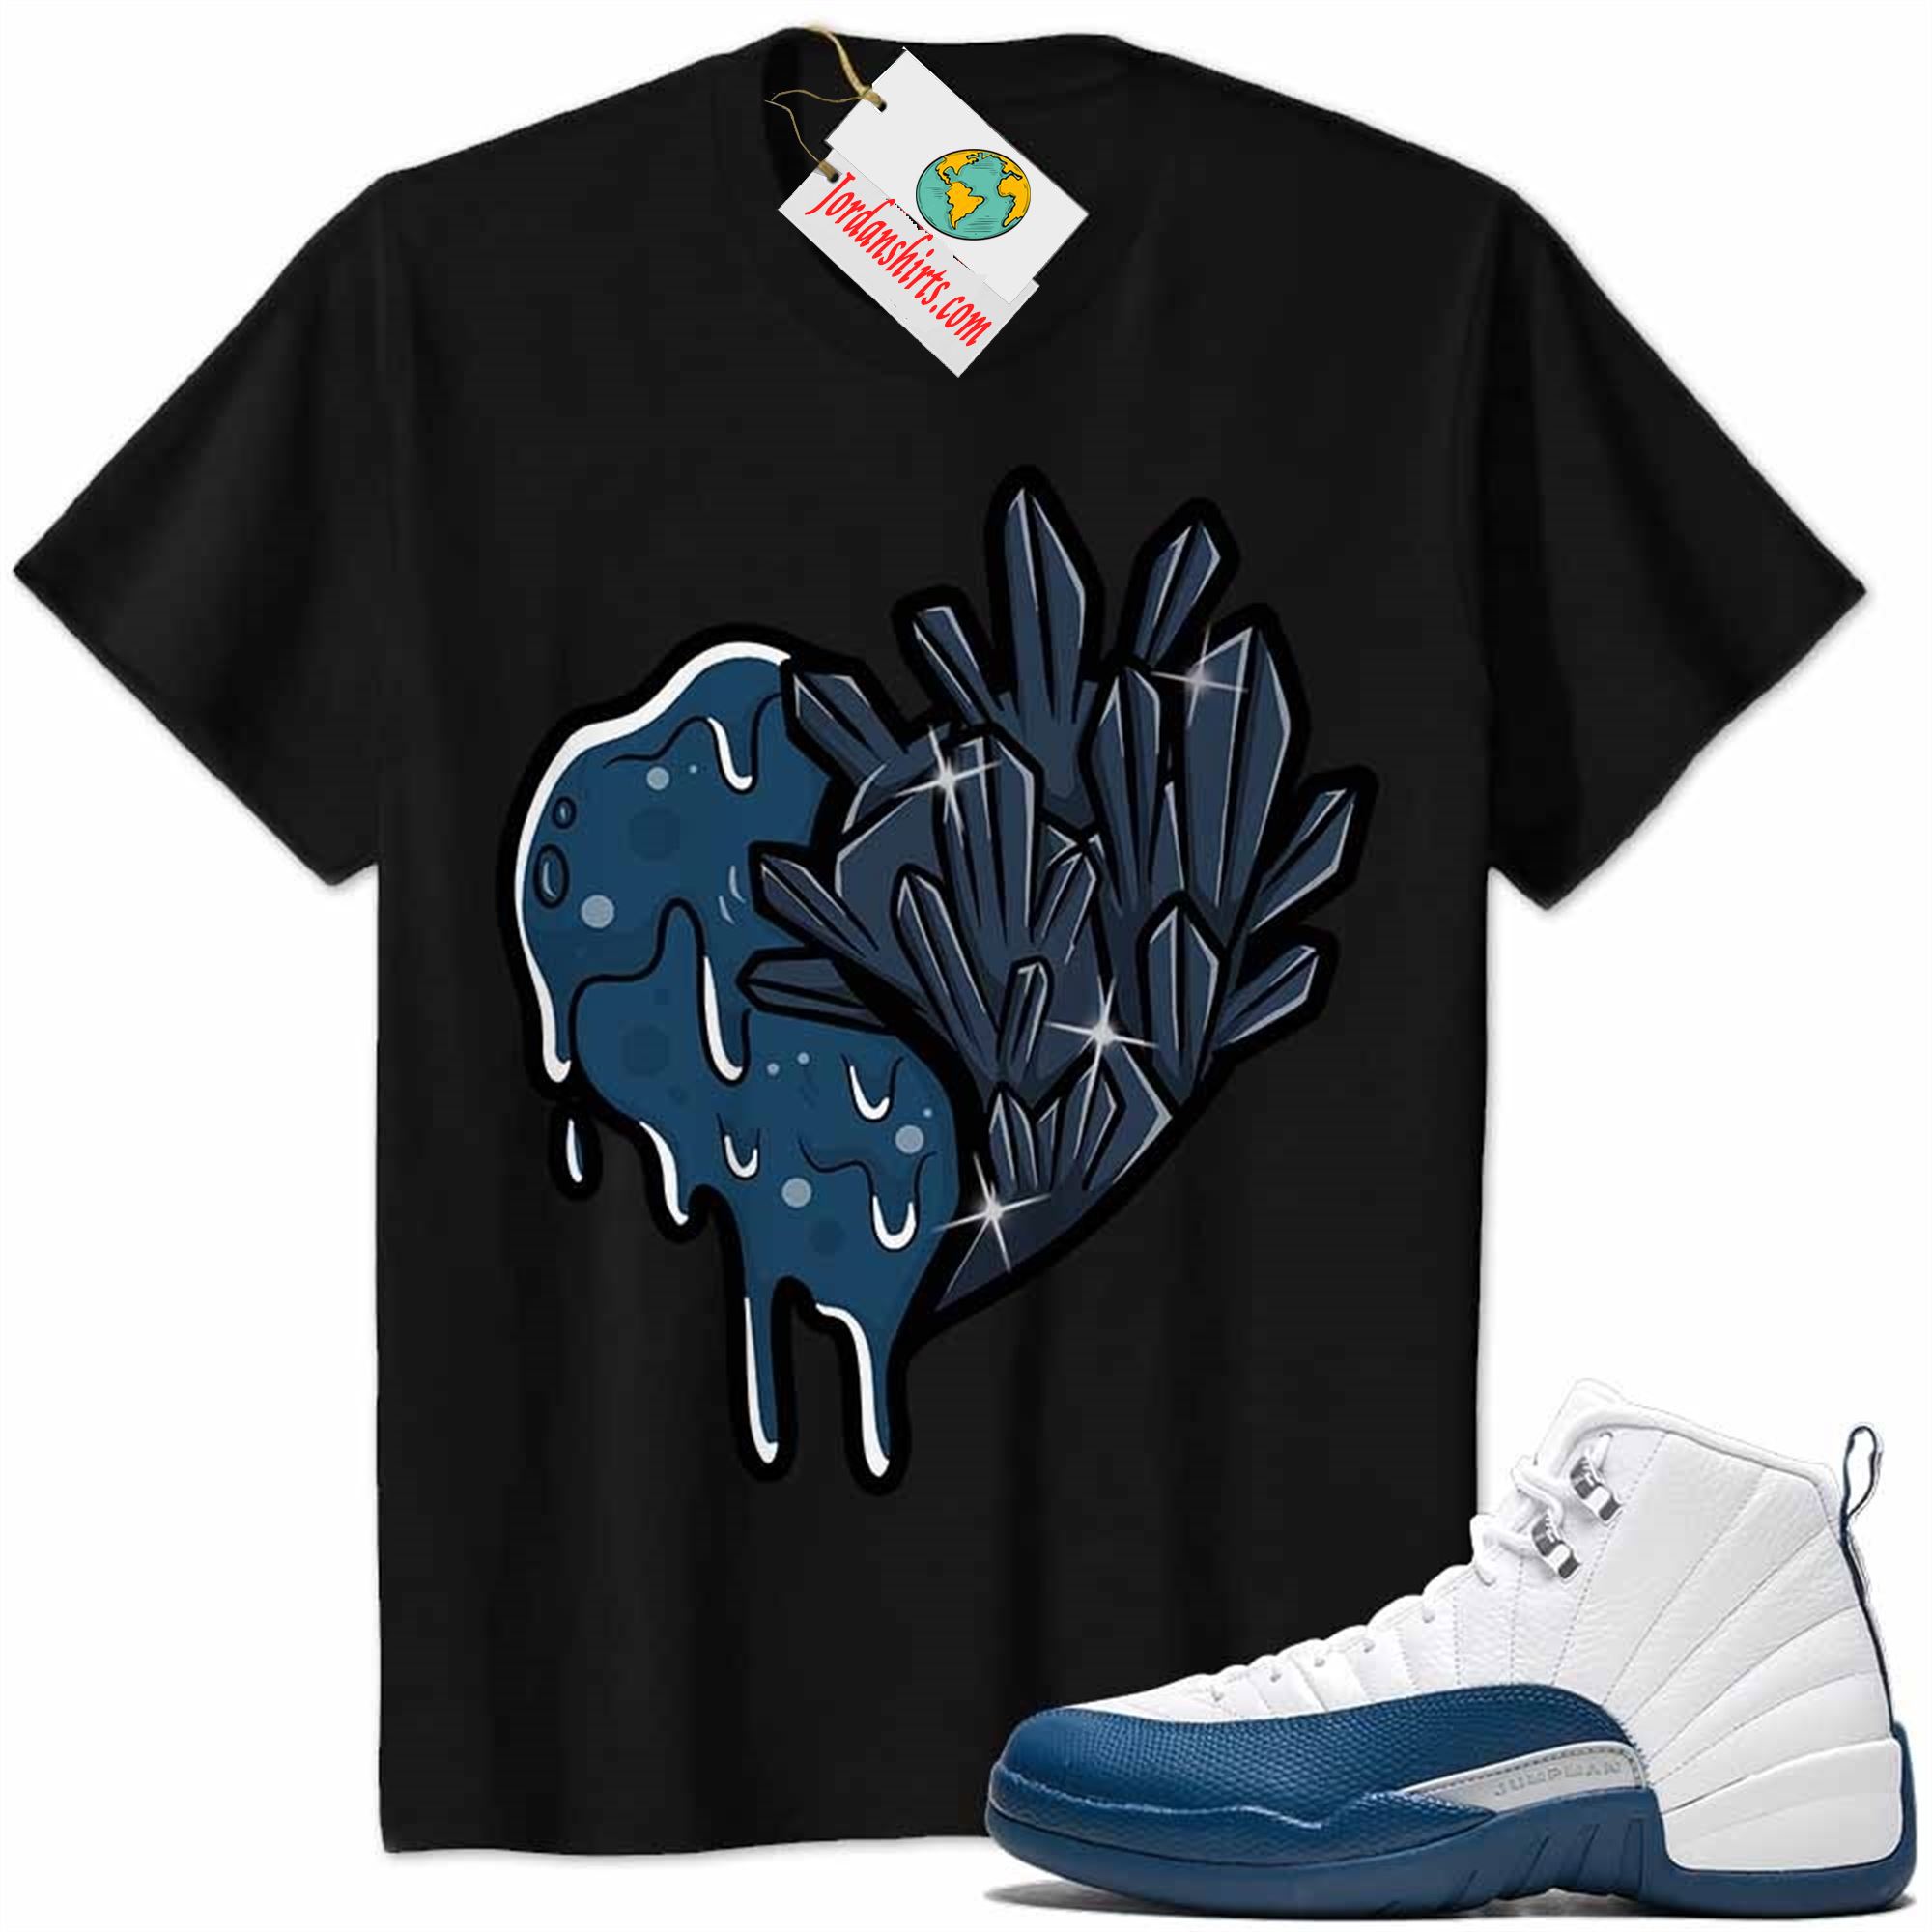 Jordan 12 Shirt, Crystal And Melt Heart Black Air Jordan 12 French Blue 12s Plus Size Up To 5xl